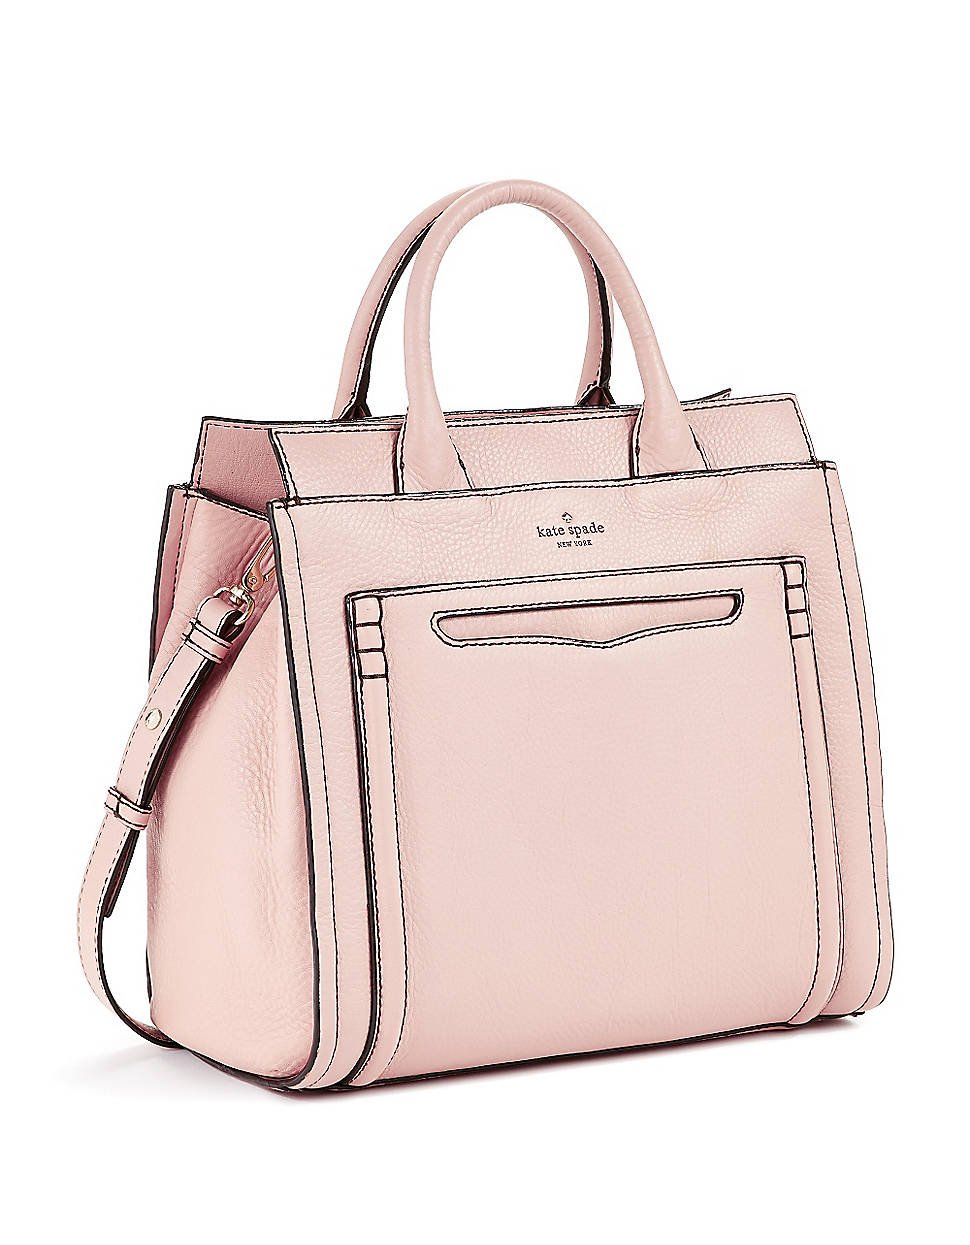 Kate spade new york Marcella Large Handbag in Pink | Lyst